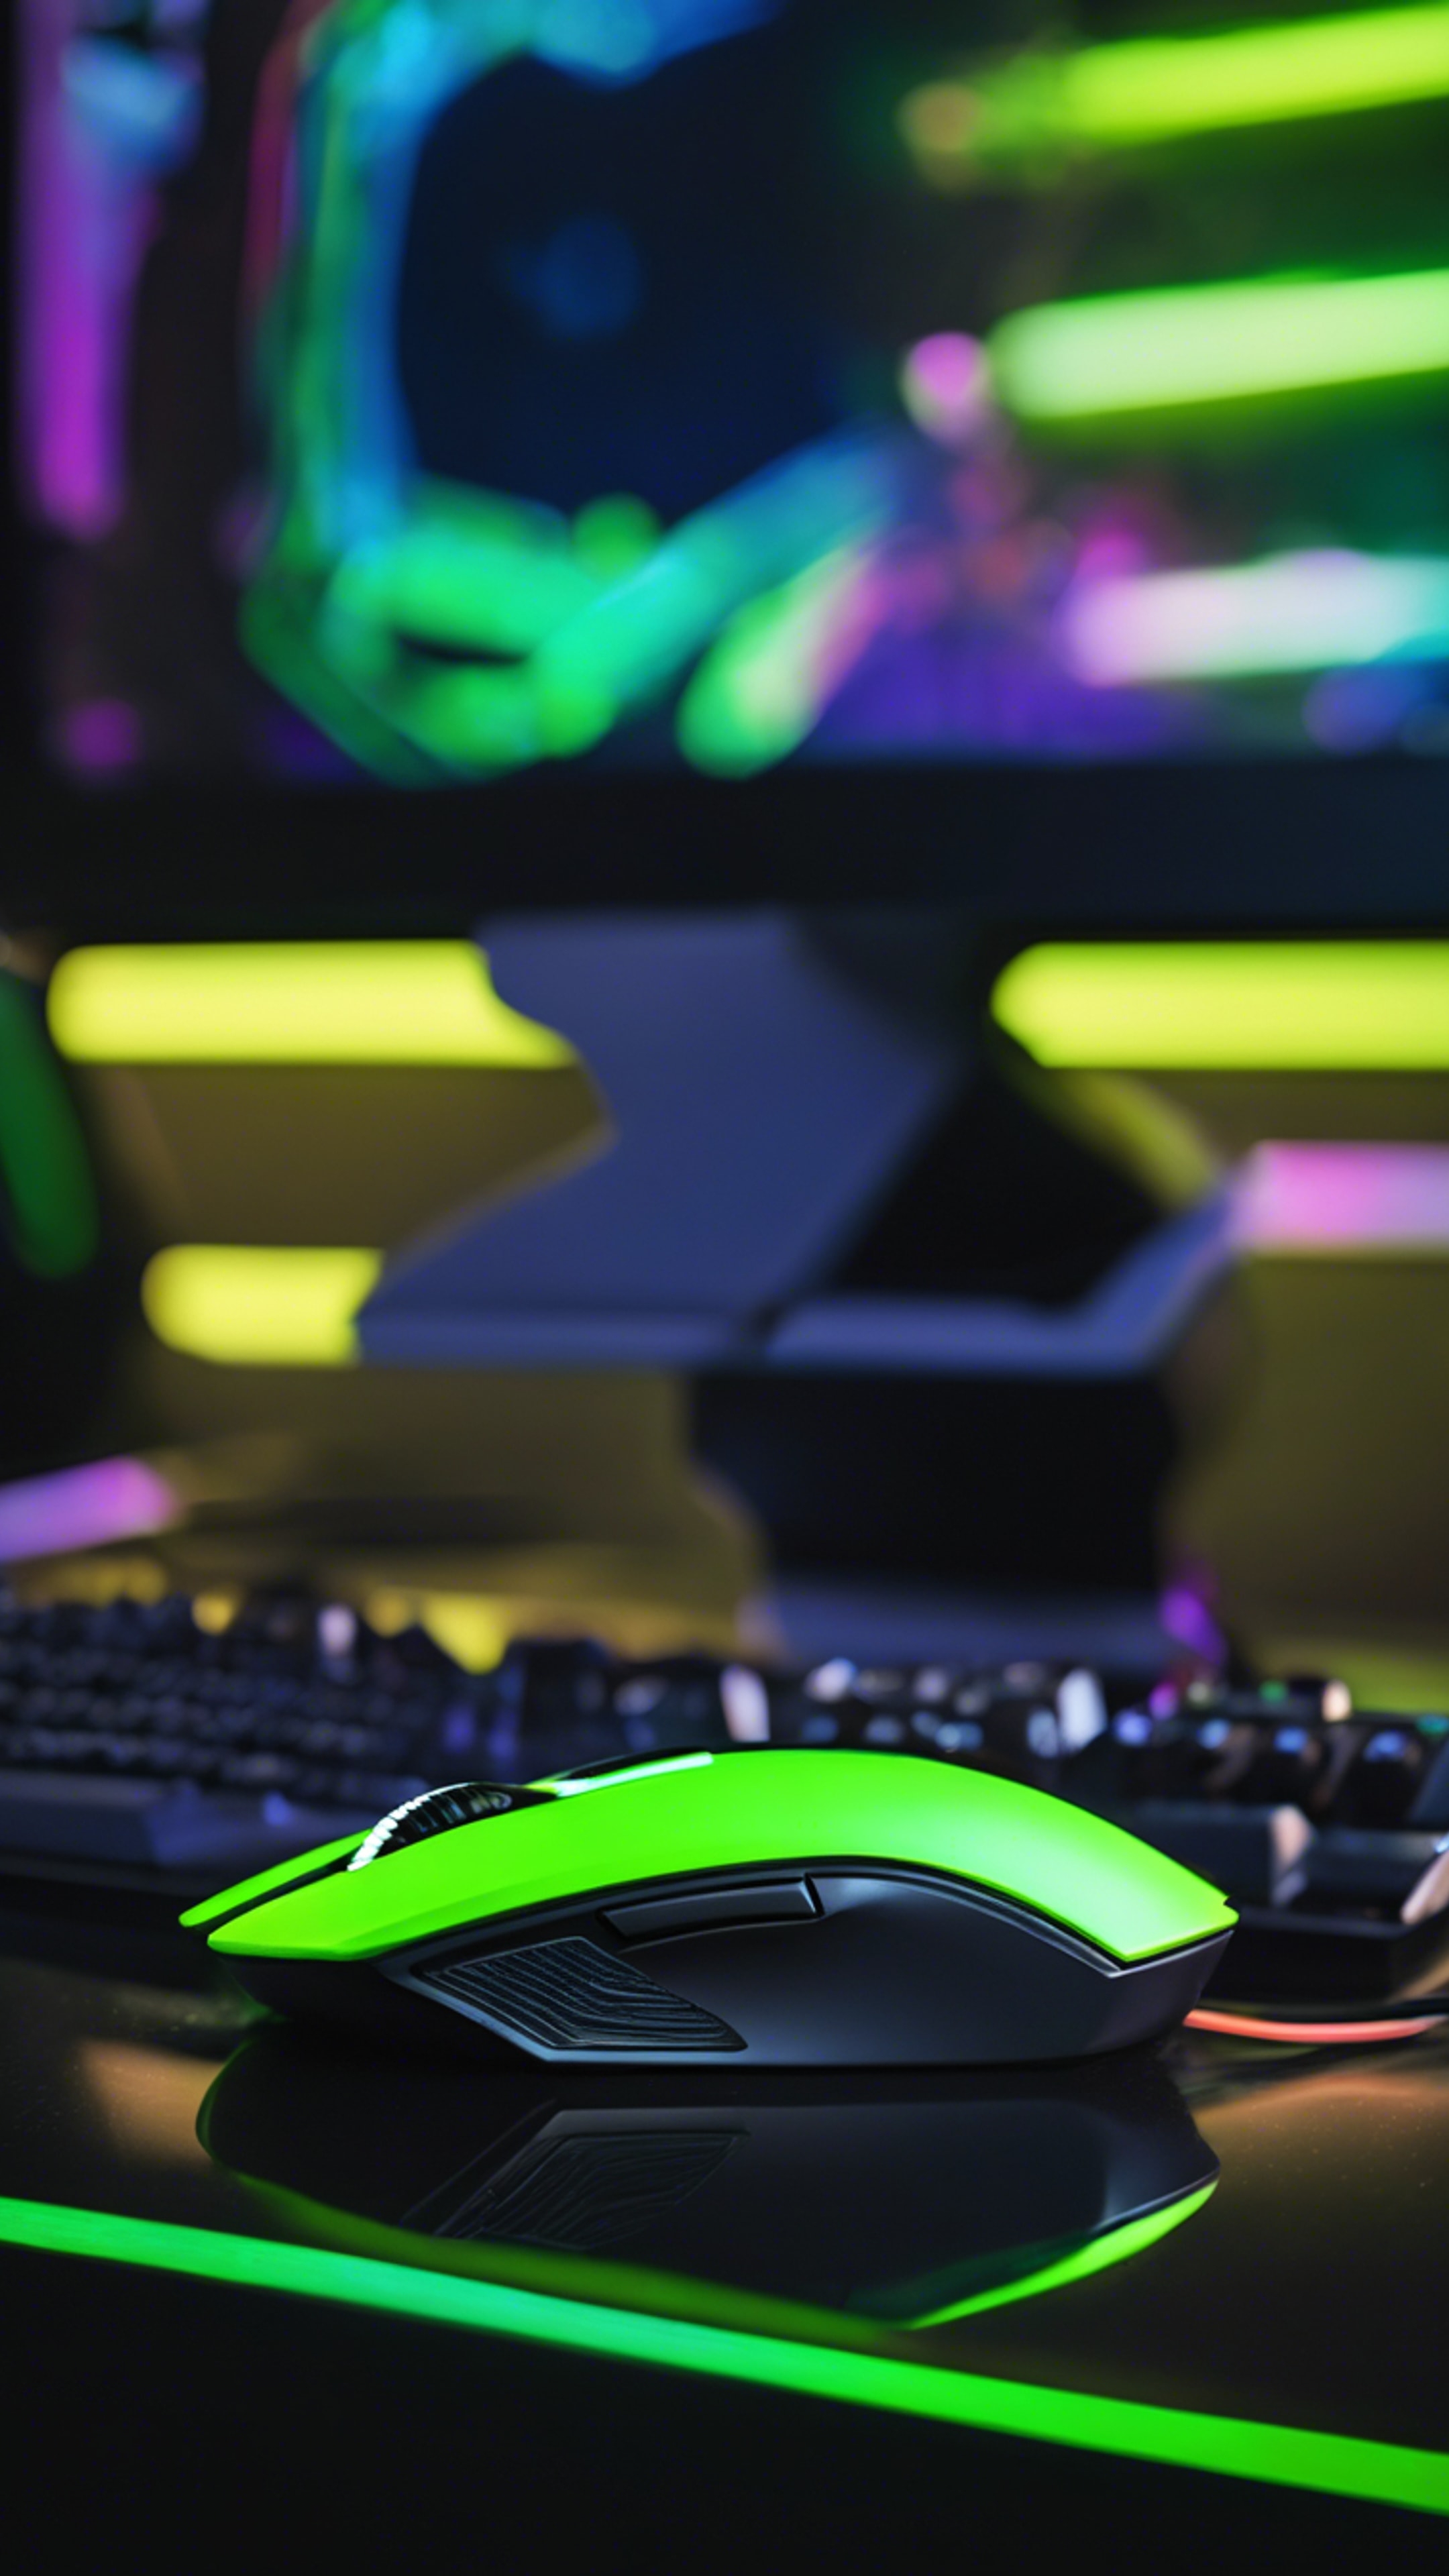 A cool neon green high-tech gaming mouse on a futuristic black desk setup. ورق الجدران[6d2a2b9049aa4c81a995]